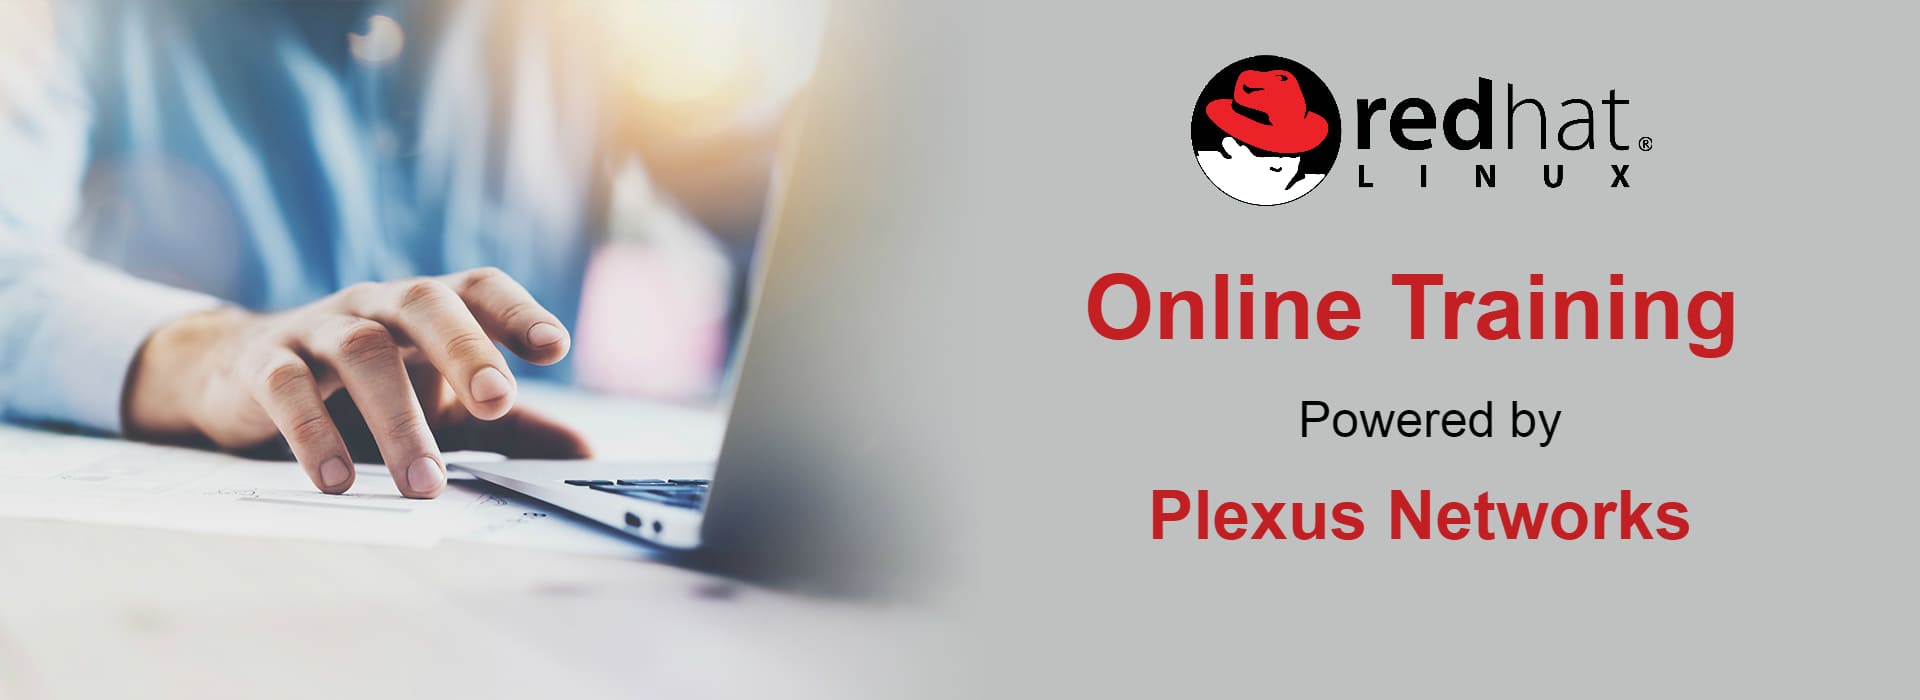 Red Hat Online Training | Plexus Networks, Chennai, Tamil Nadu, India